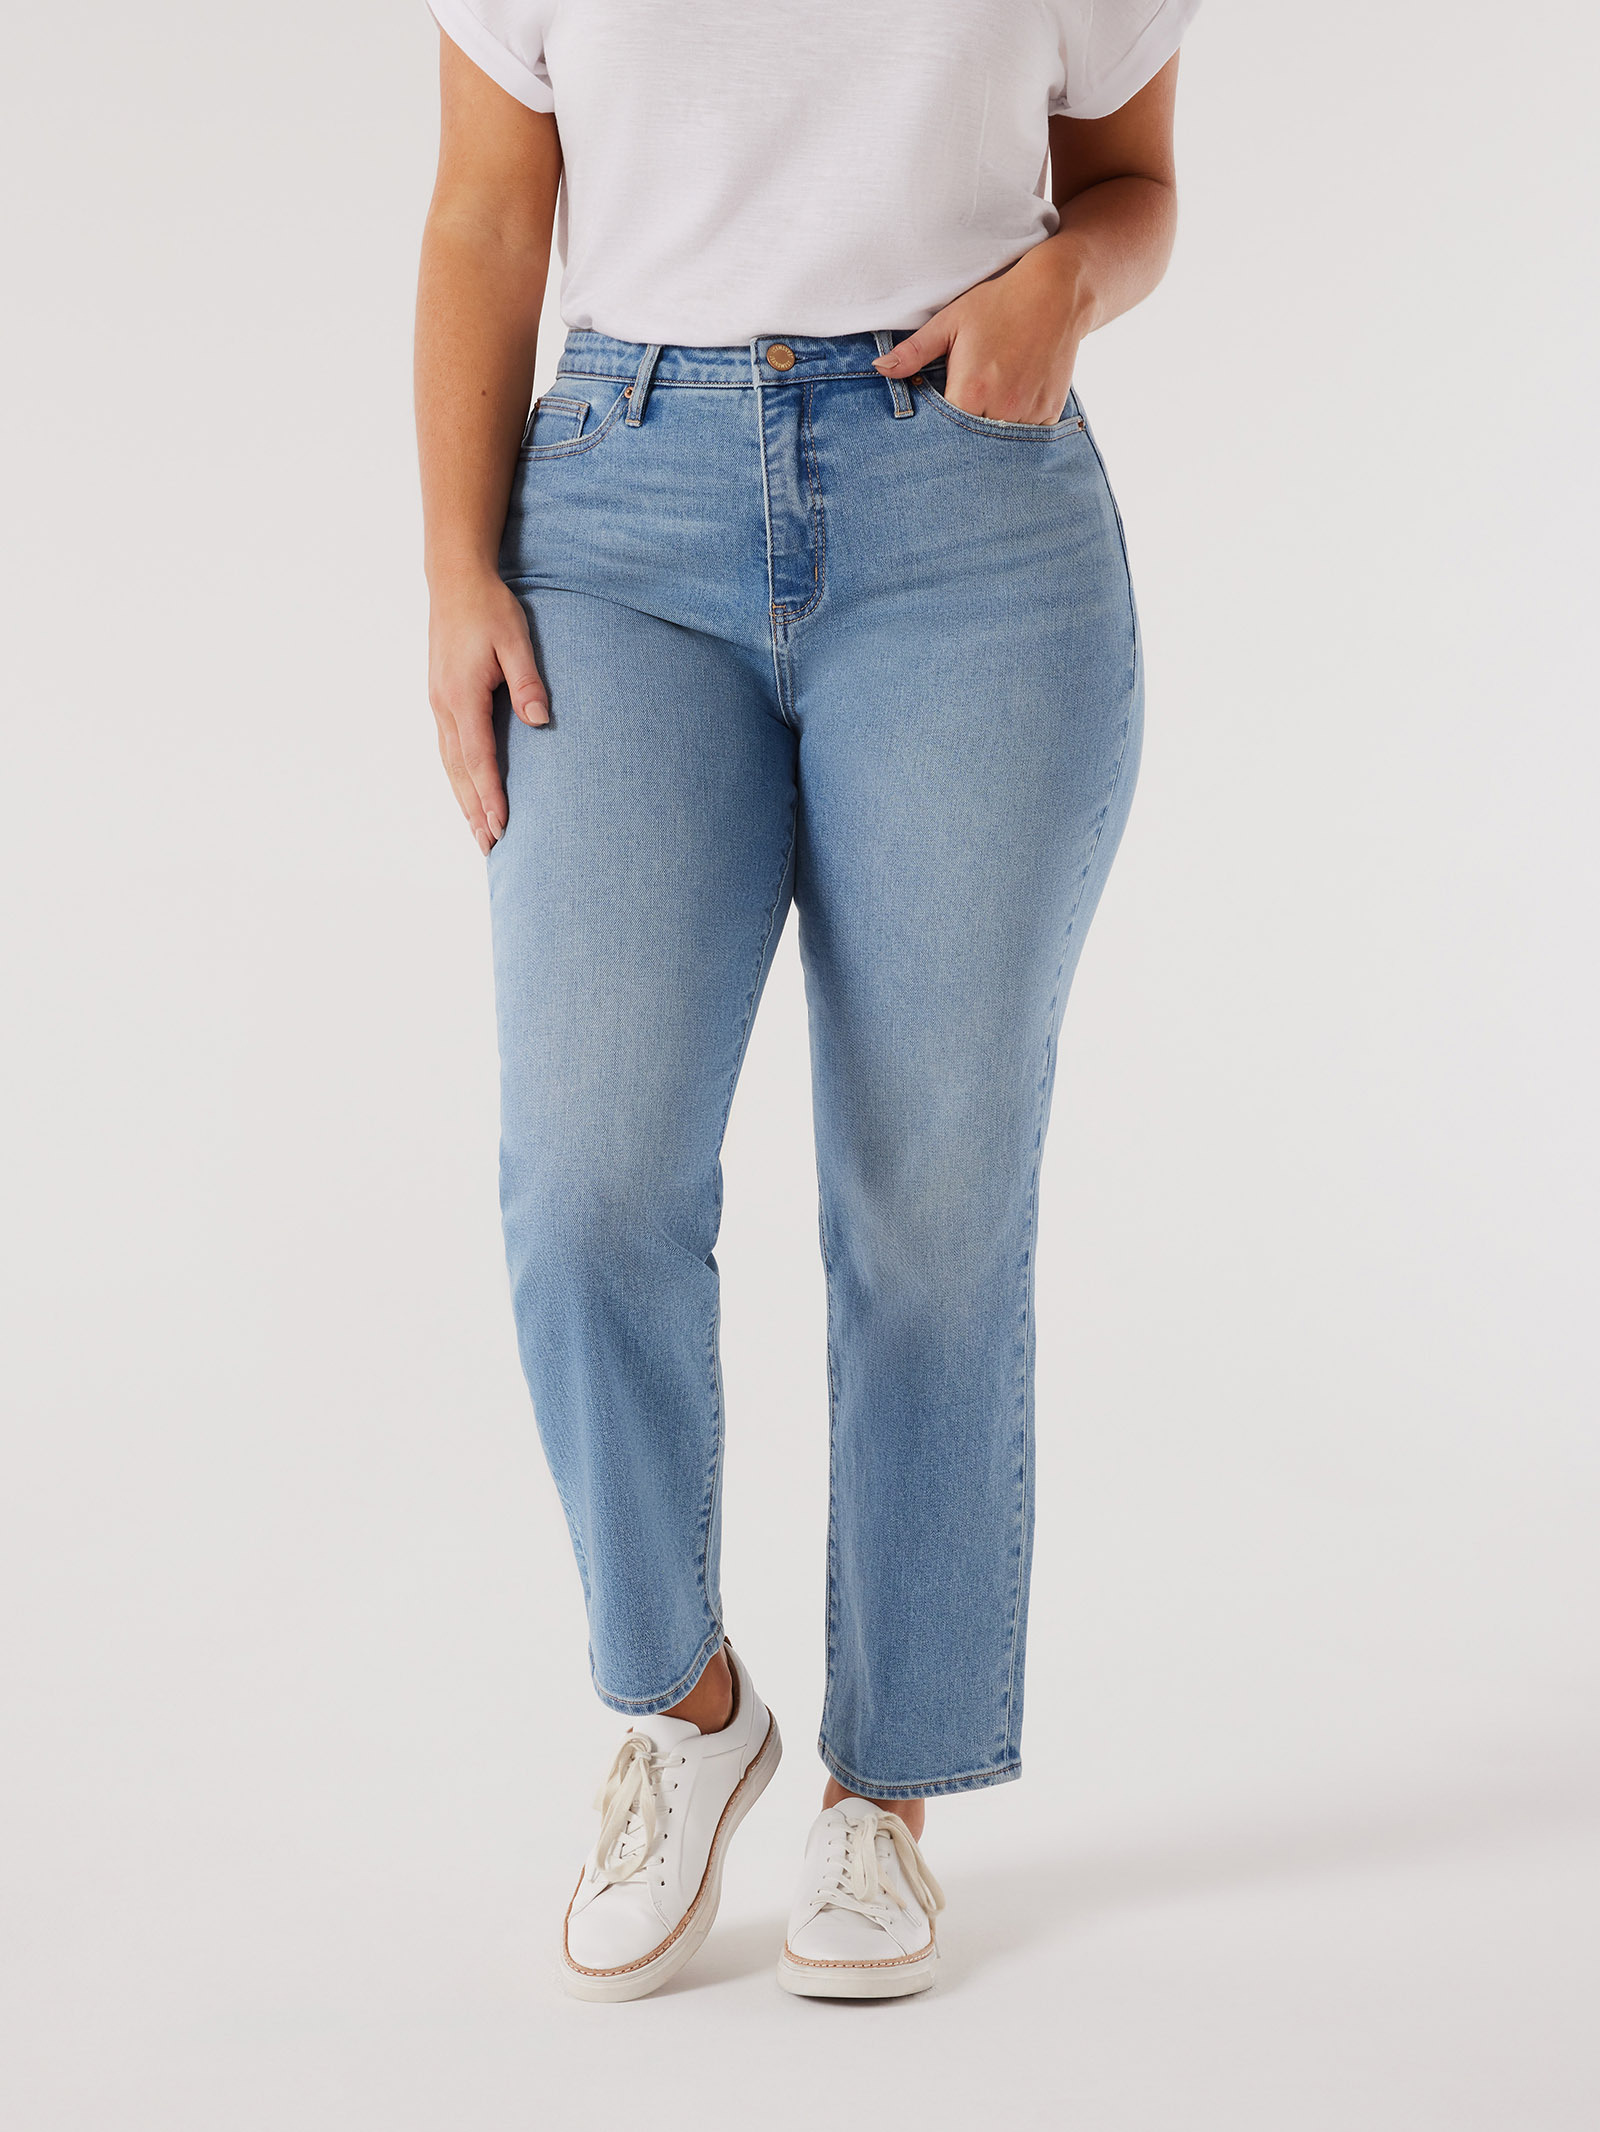 Naomi Curve Embracer Straight Jeans | Jeanswest